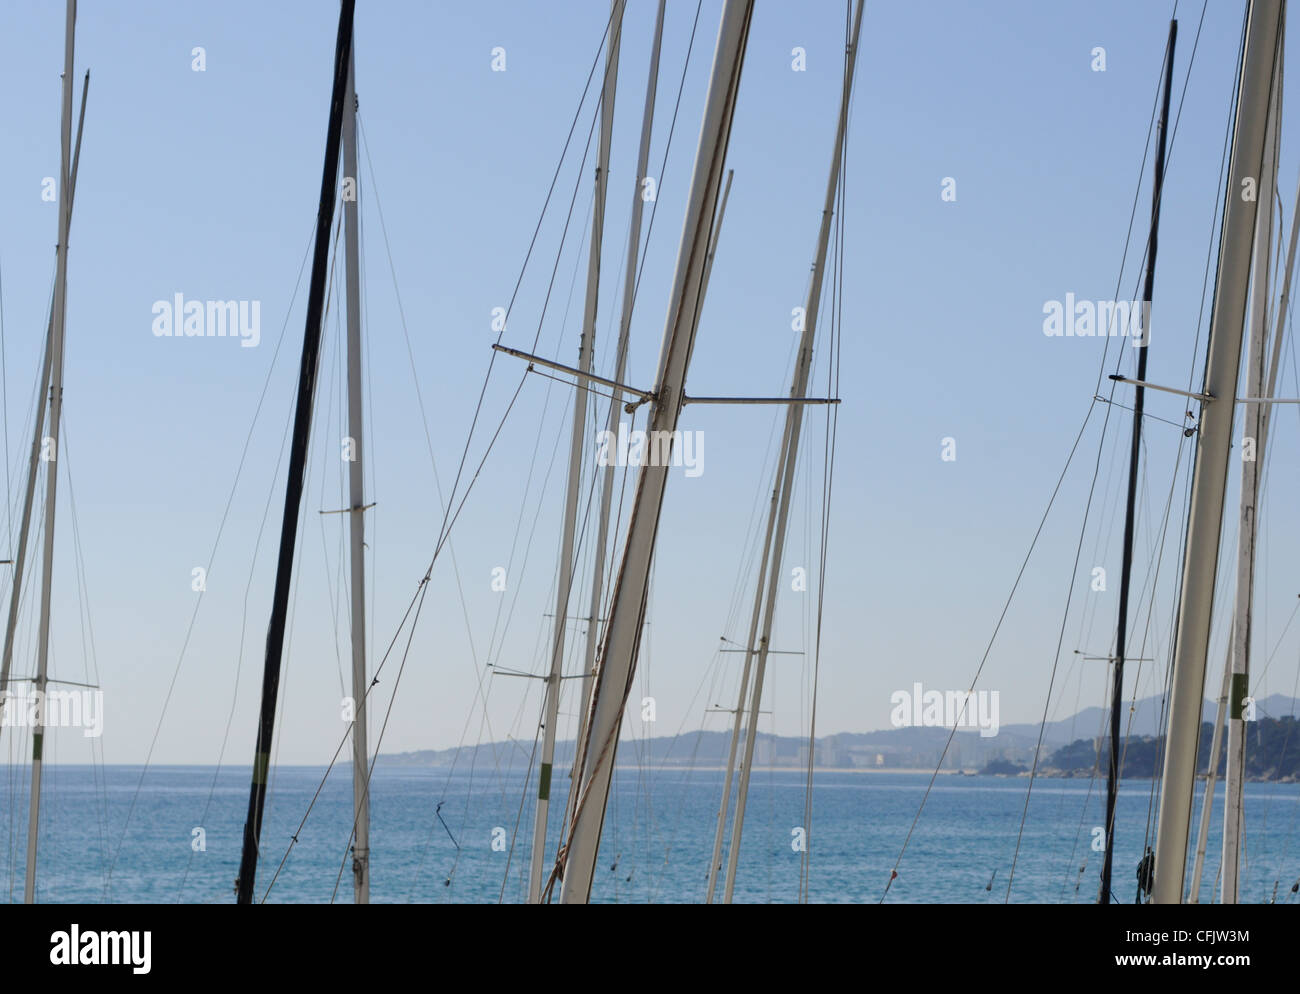 The masts of sailing boats in Palamos Costa Brava Stock Photo